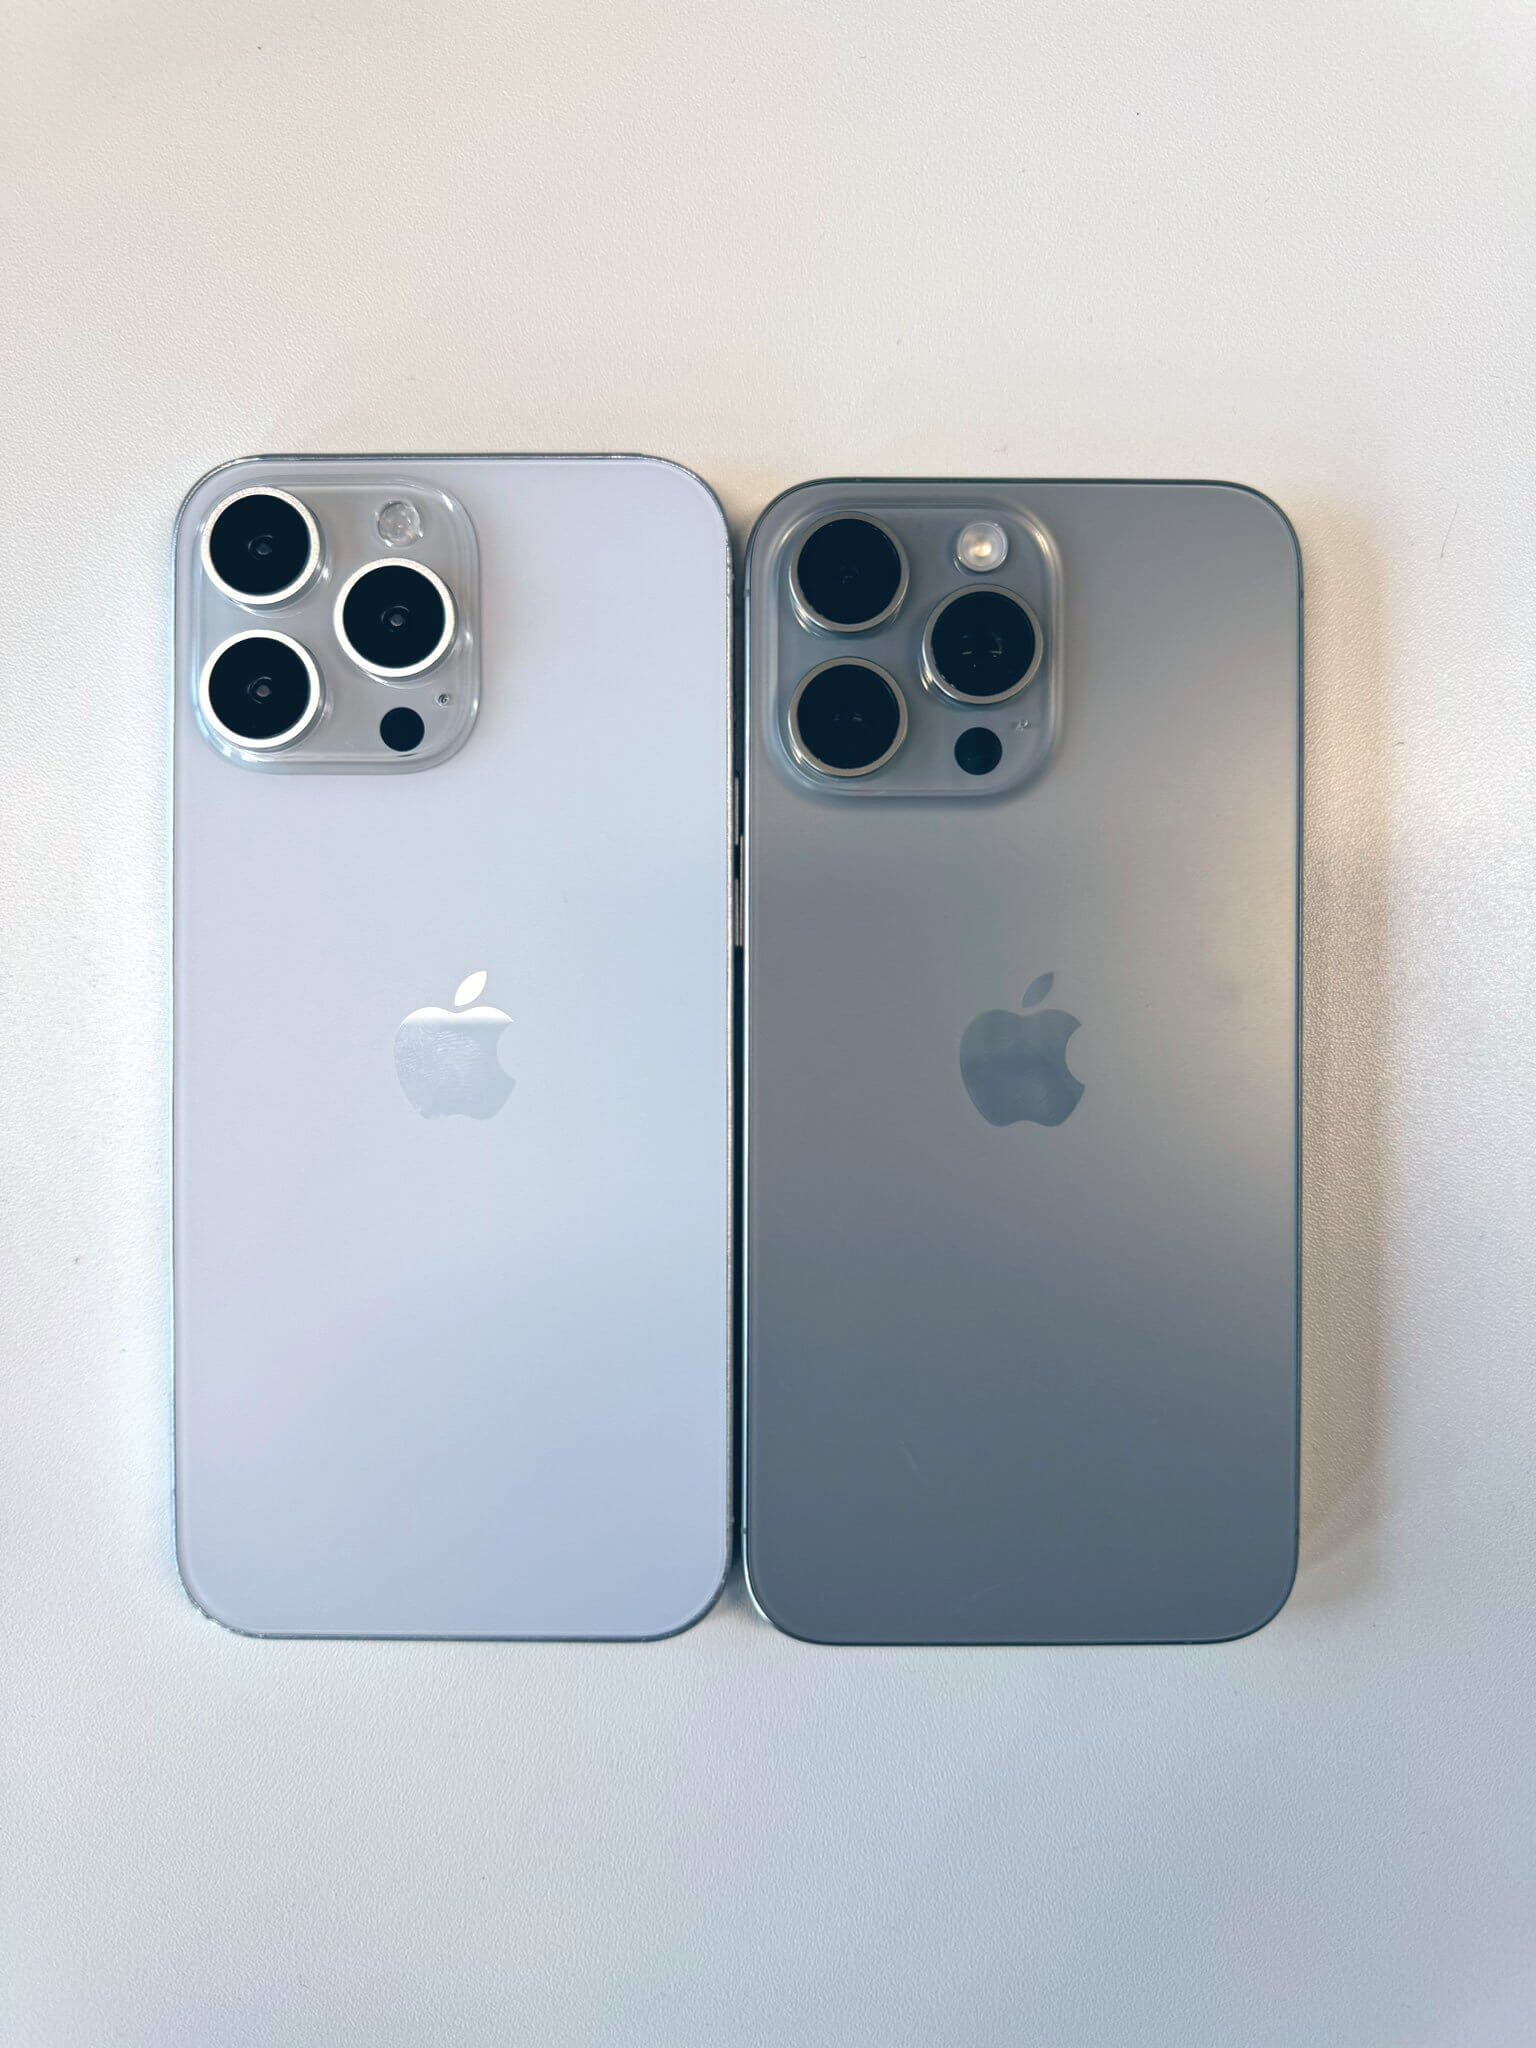 iPhone 16 Pro Max vs iPhone 15 Pro Max